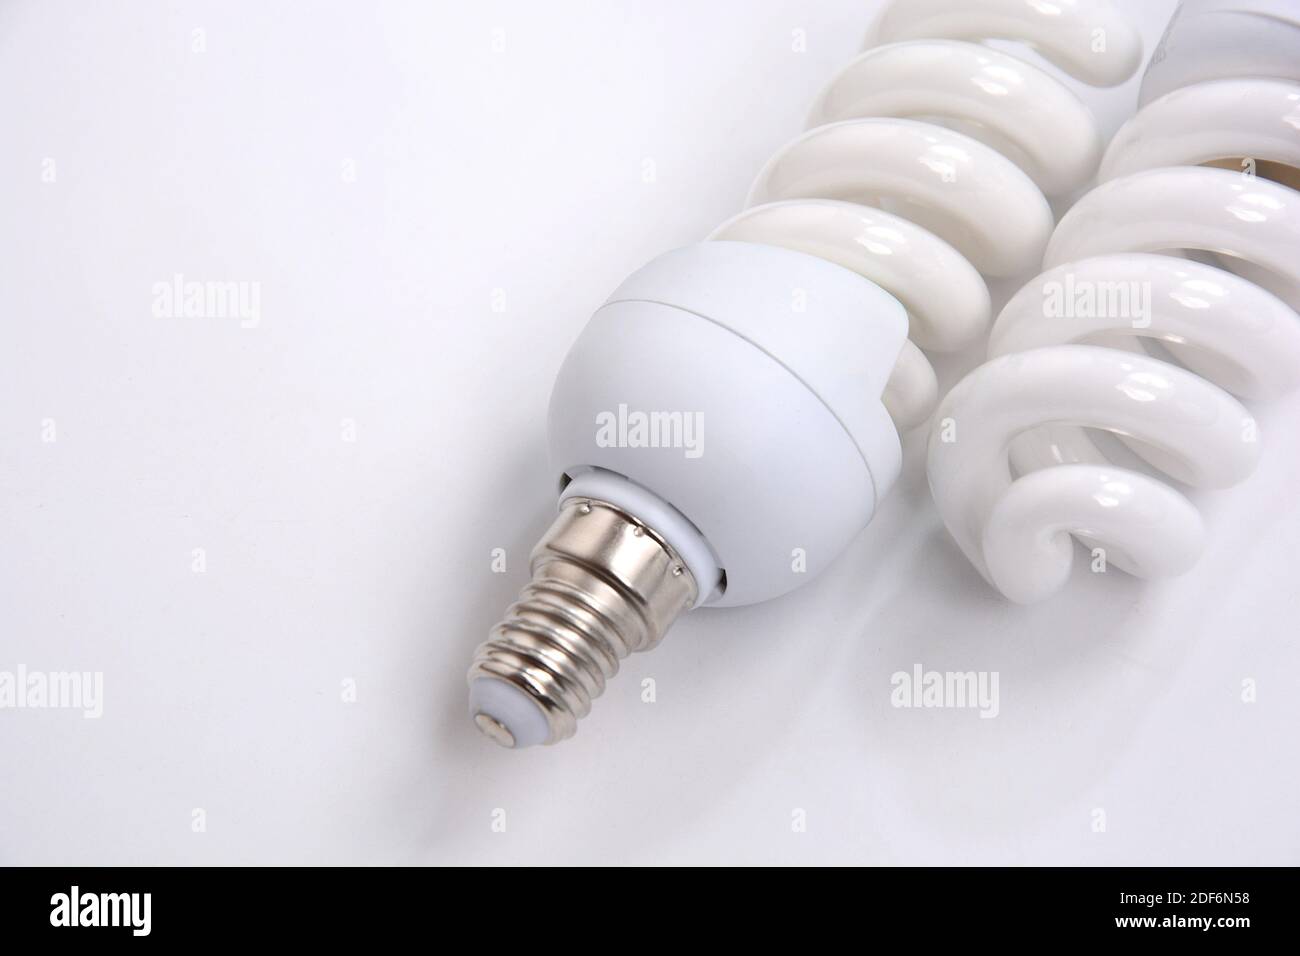 Fluorescent Lightbulbs. Two compact fluorescent light bulb over white background. Stock Photo